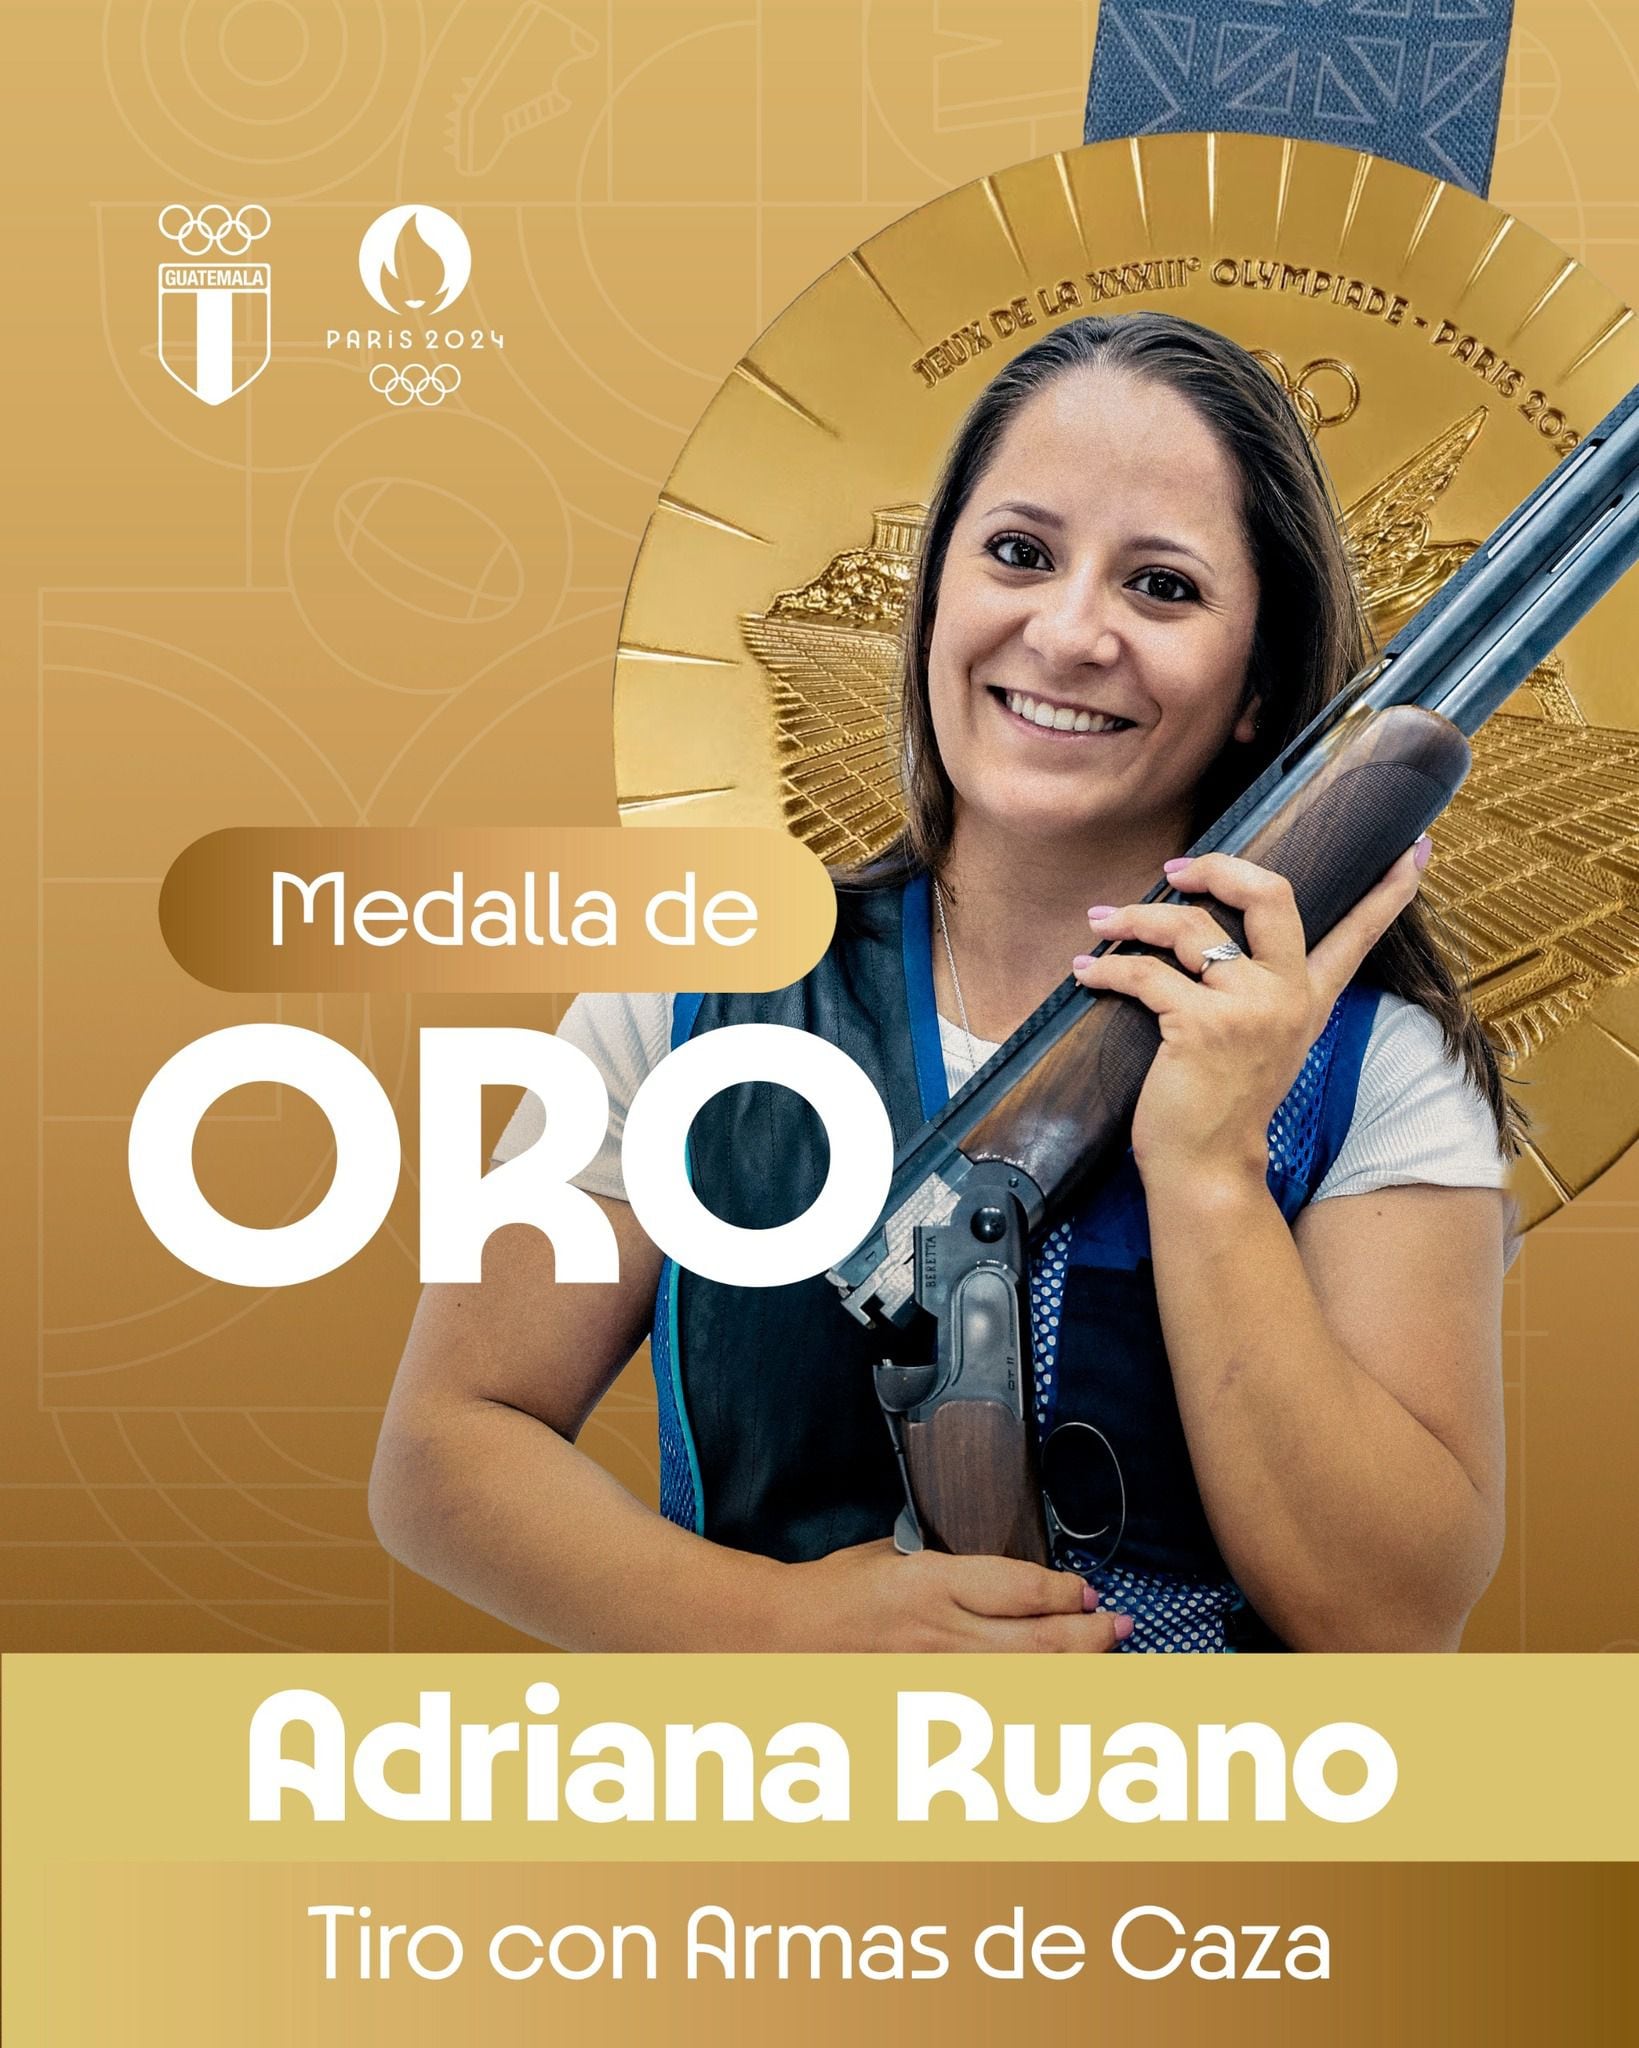 Adriana Ruano ganó oro en la prueba de tiro con armas de caza. (Foto: Comité Olímpico Guatemalteco)